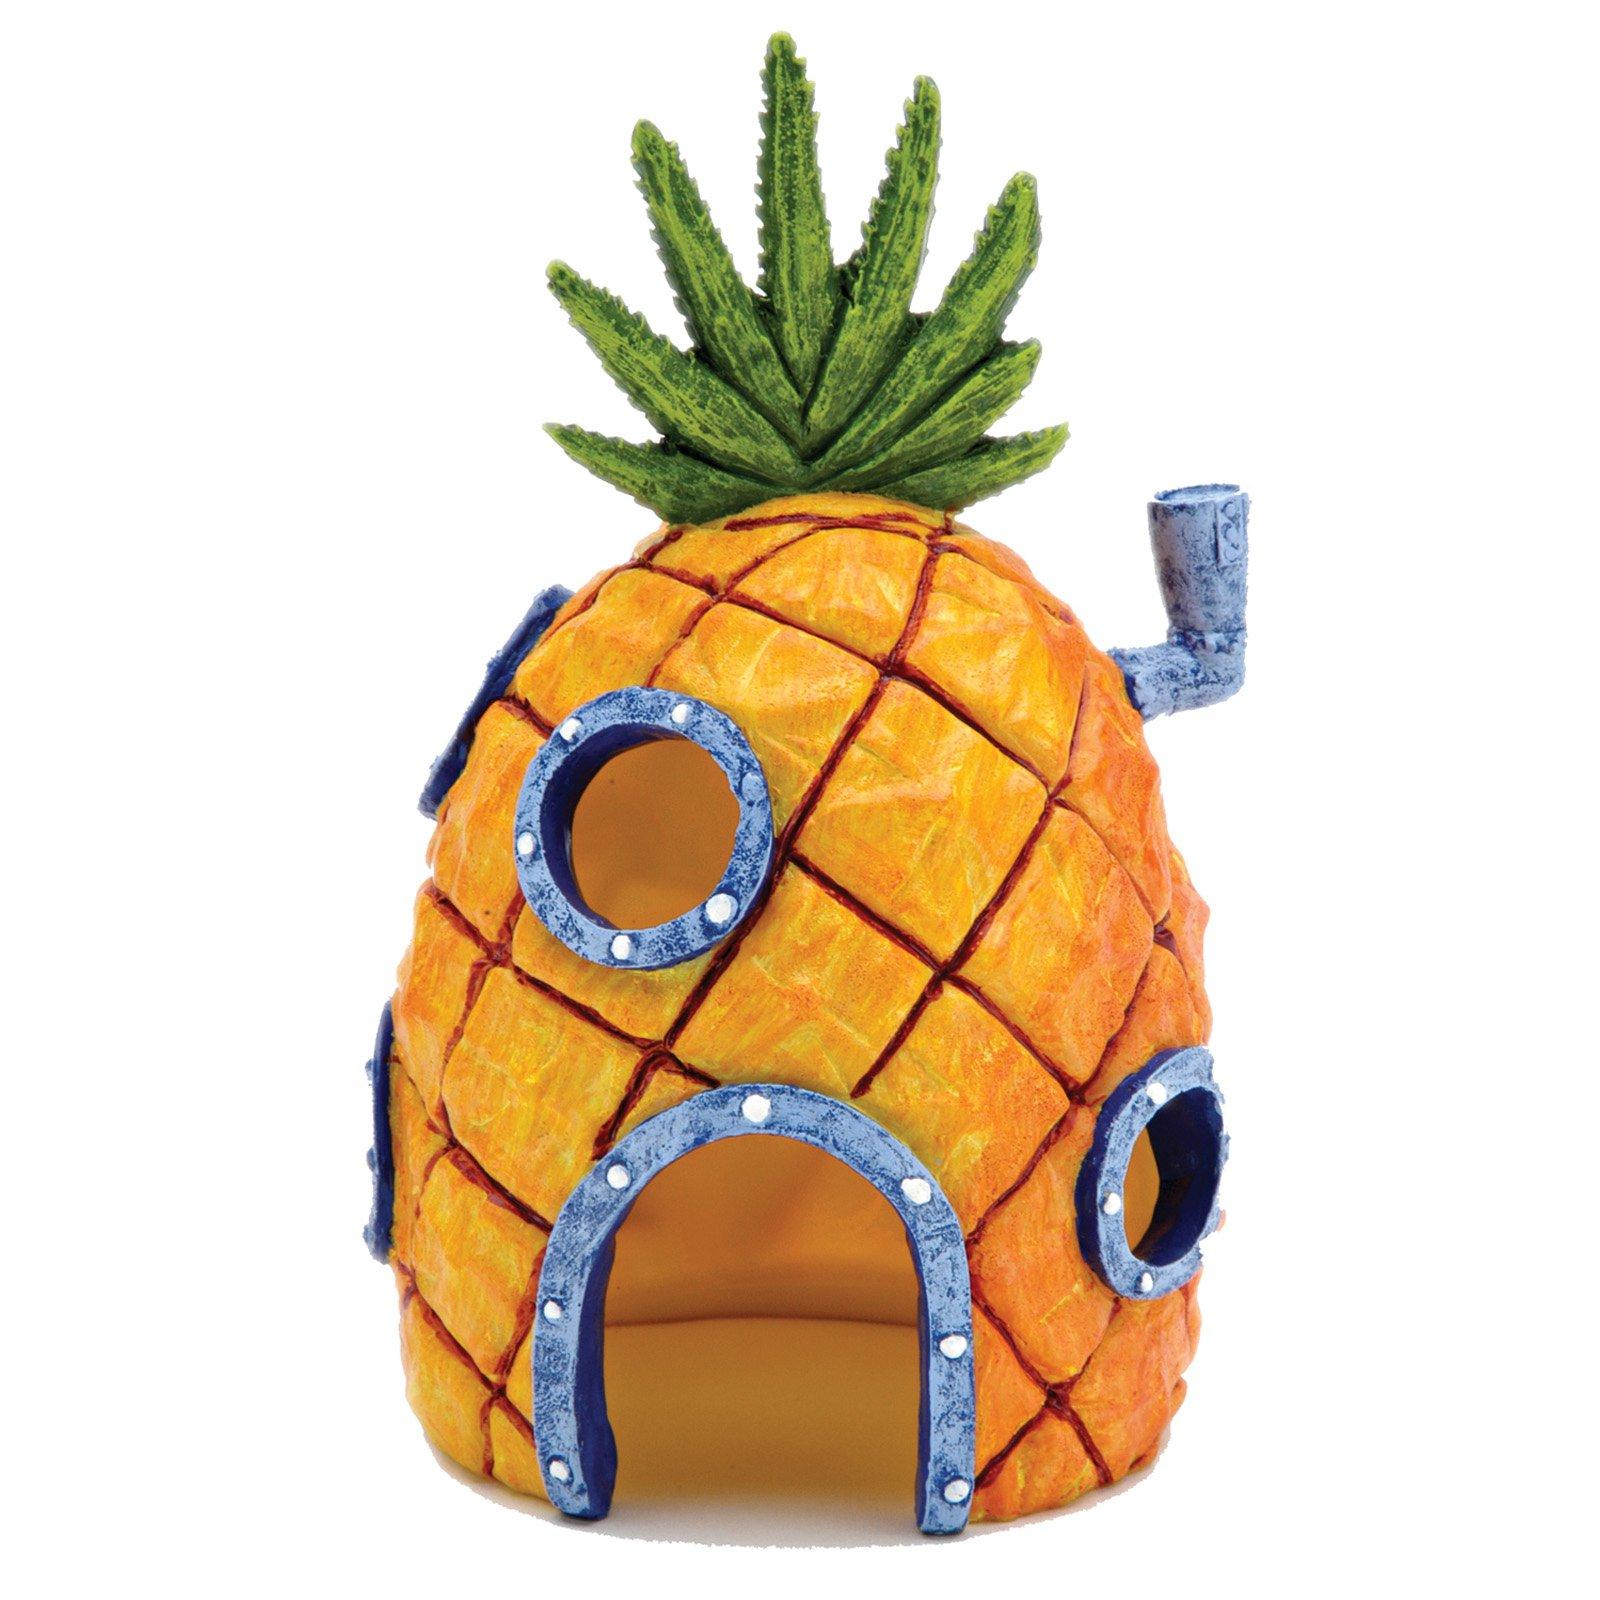 6in SpongeBob SquarePants Pineapple Home Aquarium Ornament for $4.18